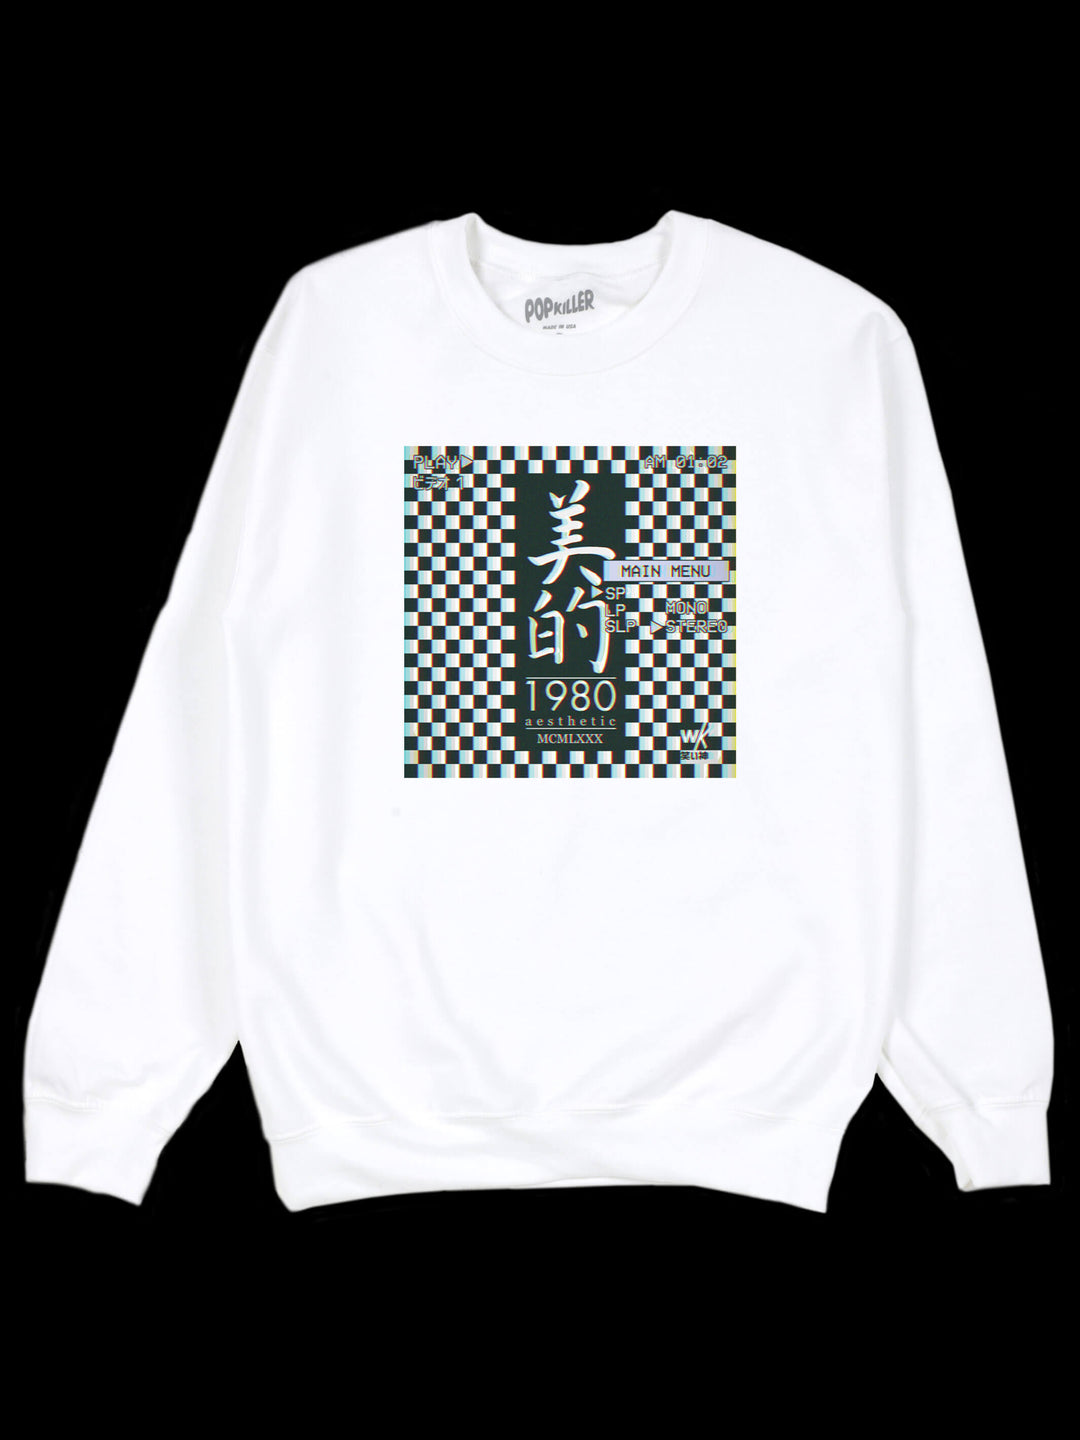 Popkiller Artist Series Warakami Vaporwave Aesthetic 1980 Pullover Sweatshirt